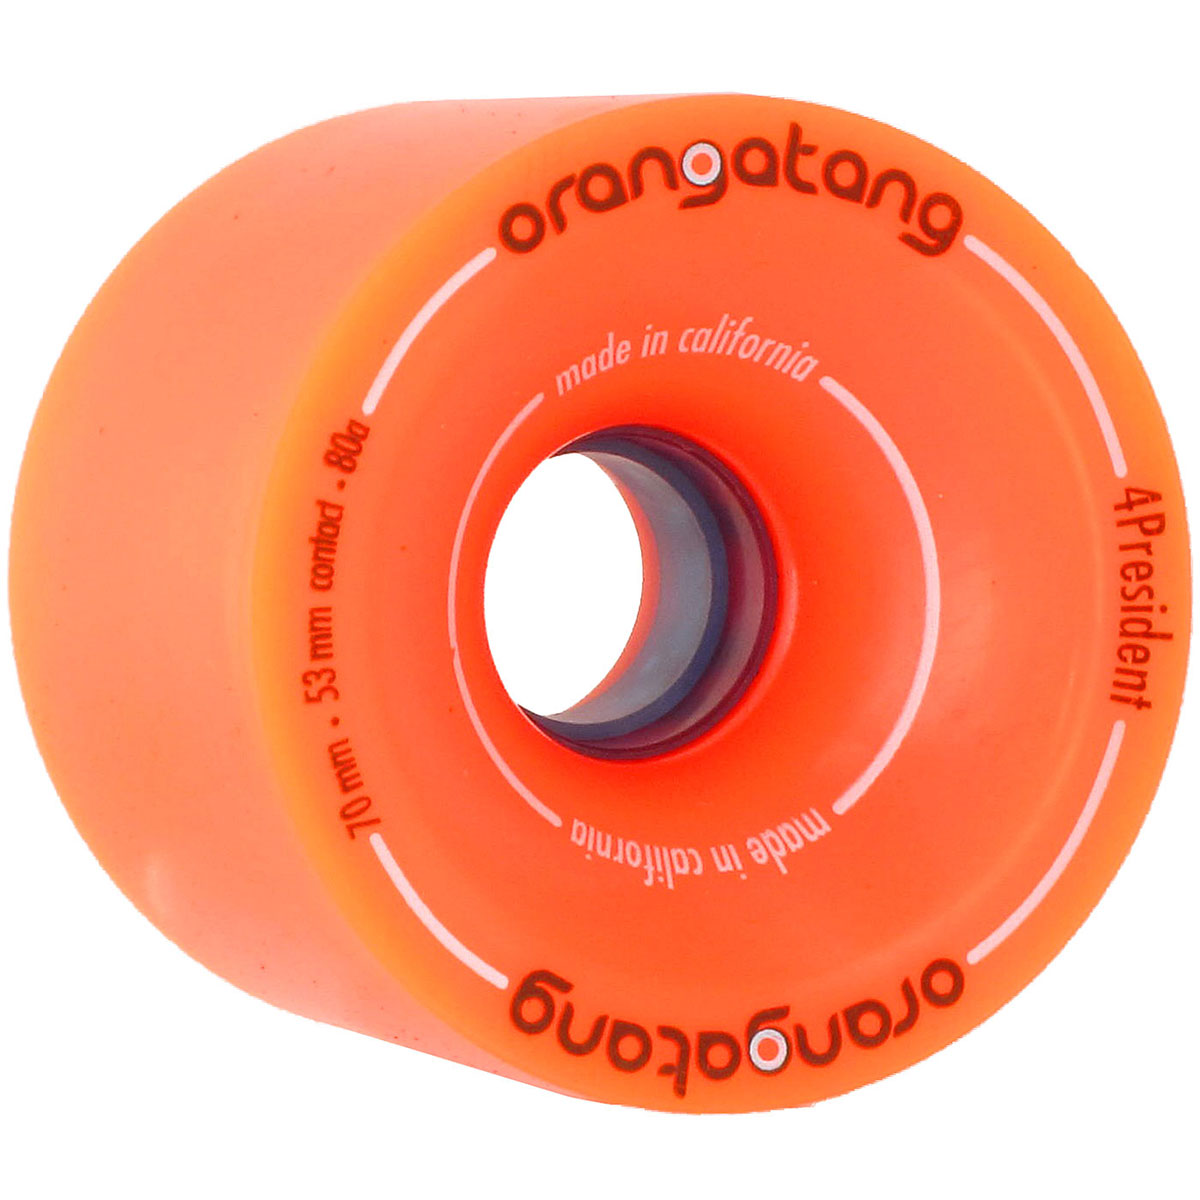 Orangatang 4 President Longboard Wheels 70mm 80a Orange image 1